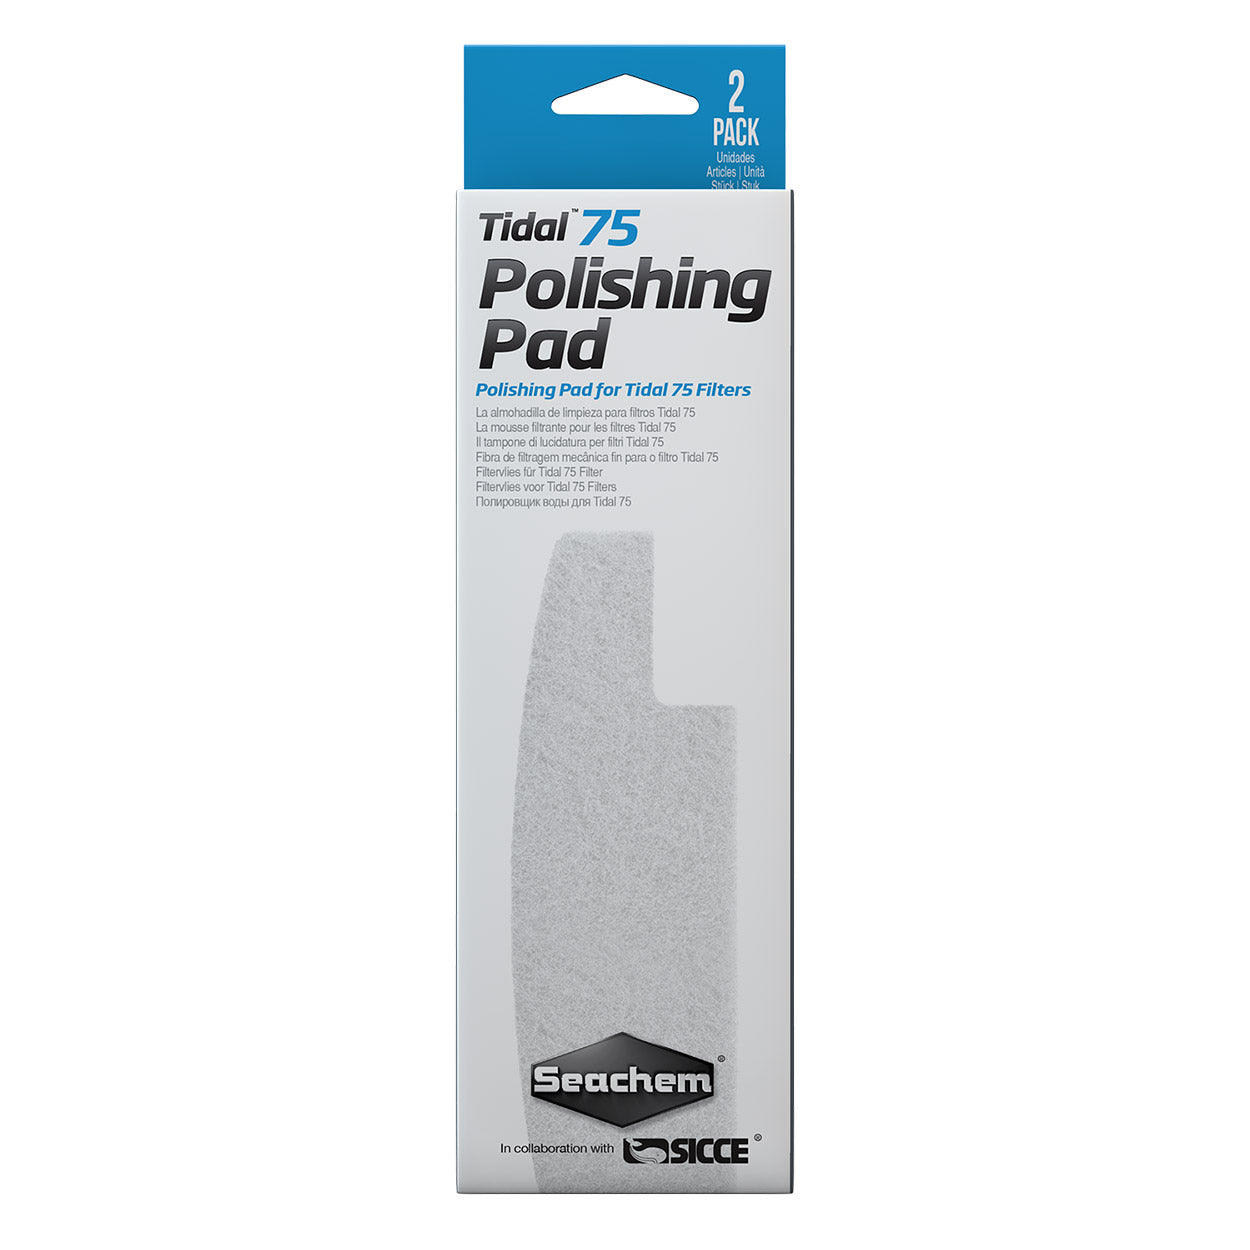 Seachem Tidal Polishing Pads  - 2 pack